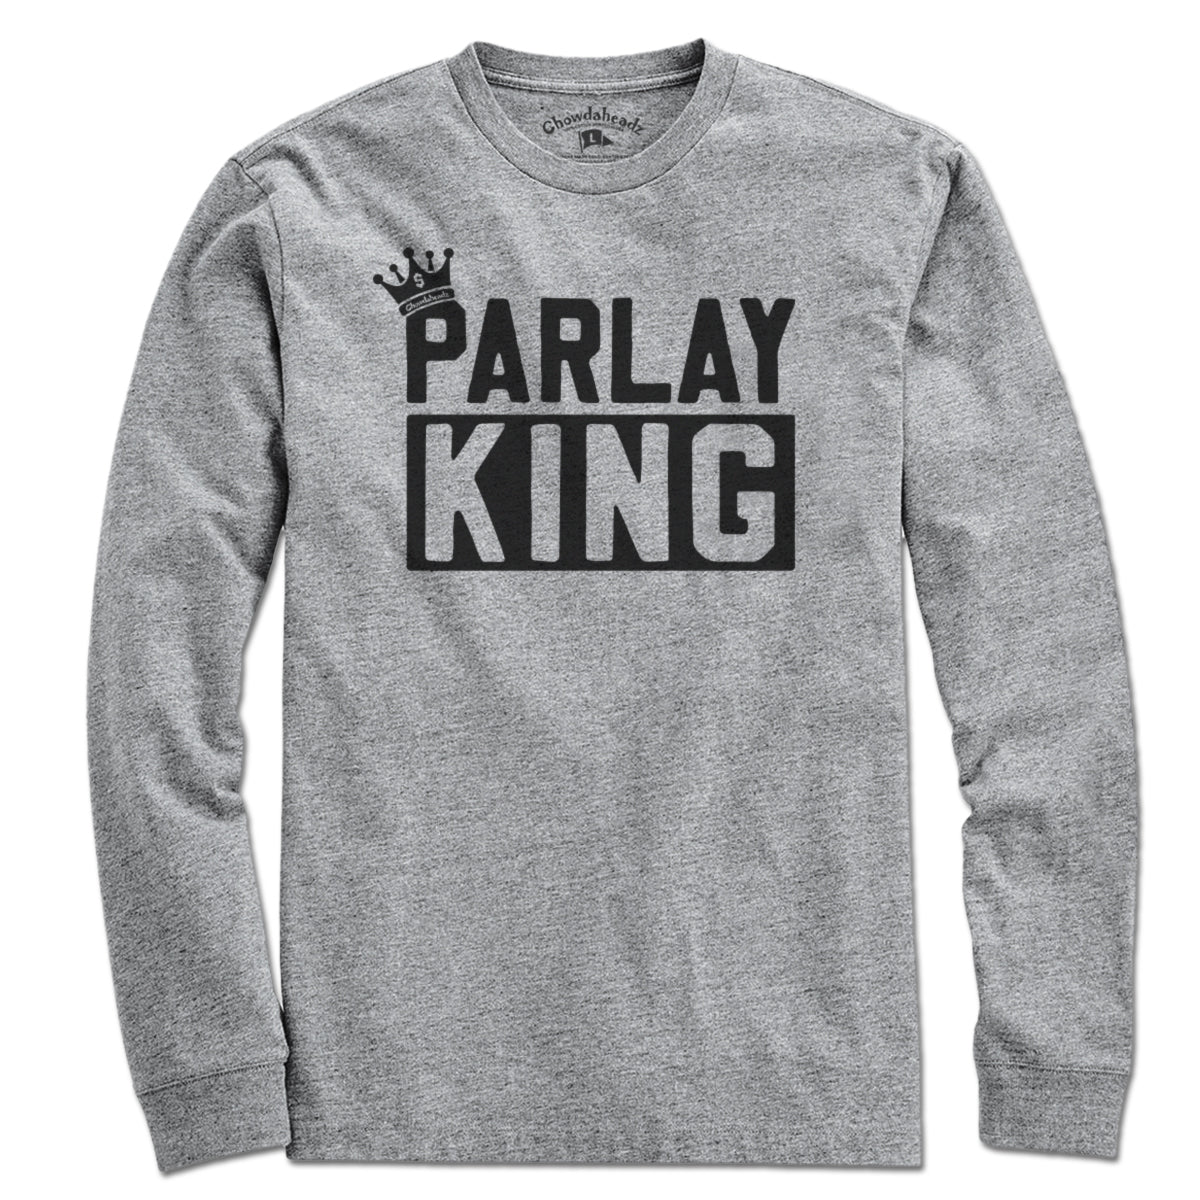 Parlay King T-shirt - Chowdaheadz